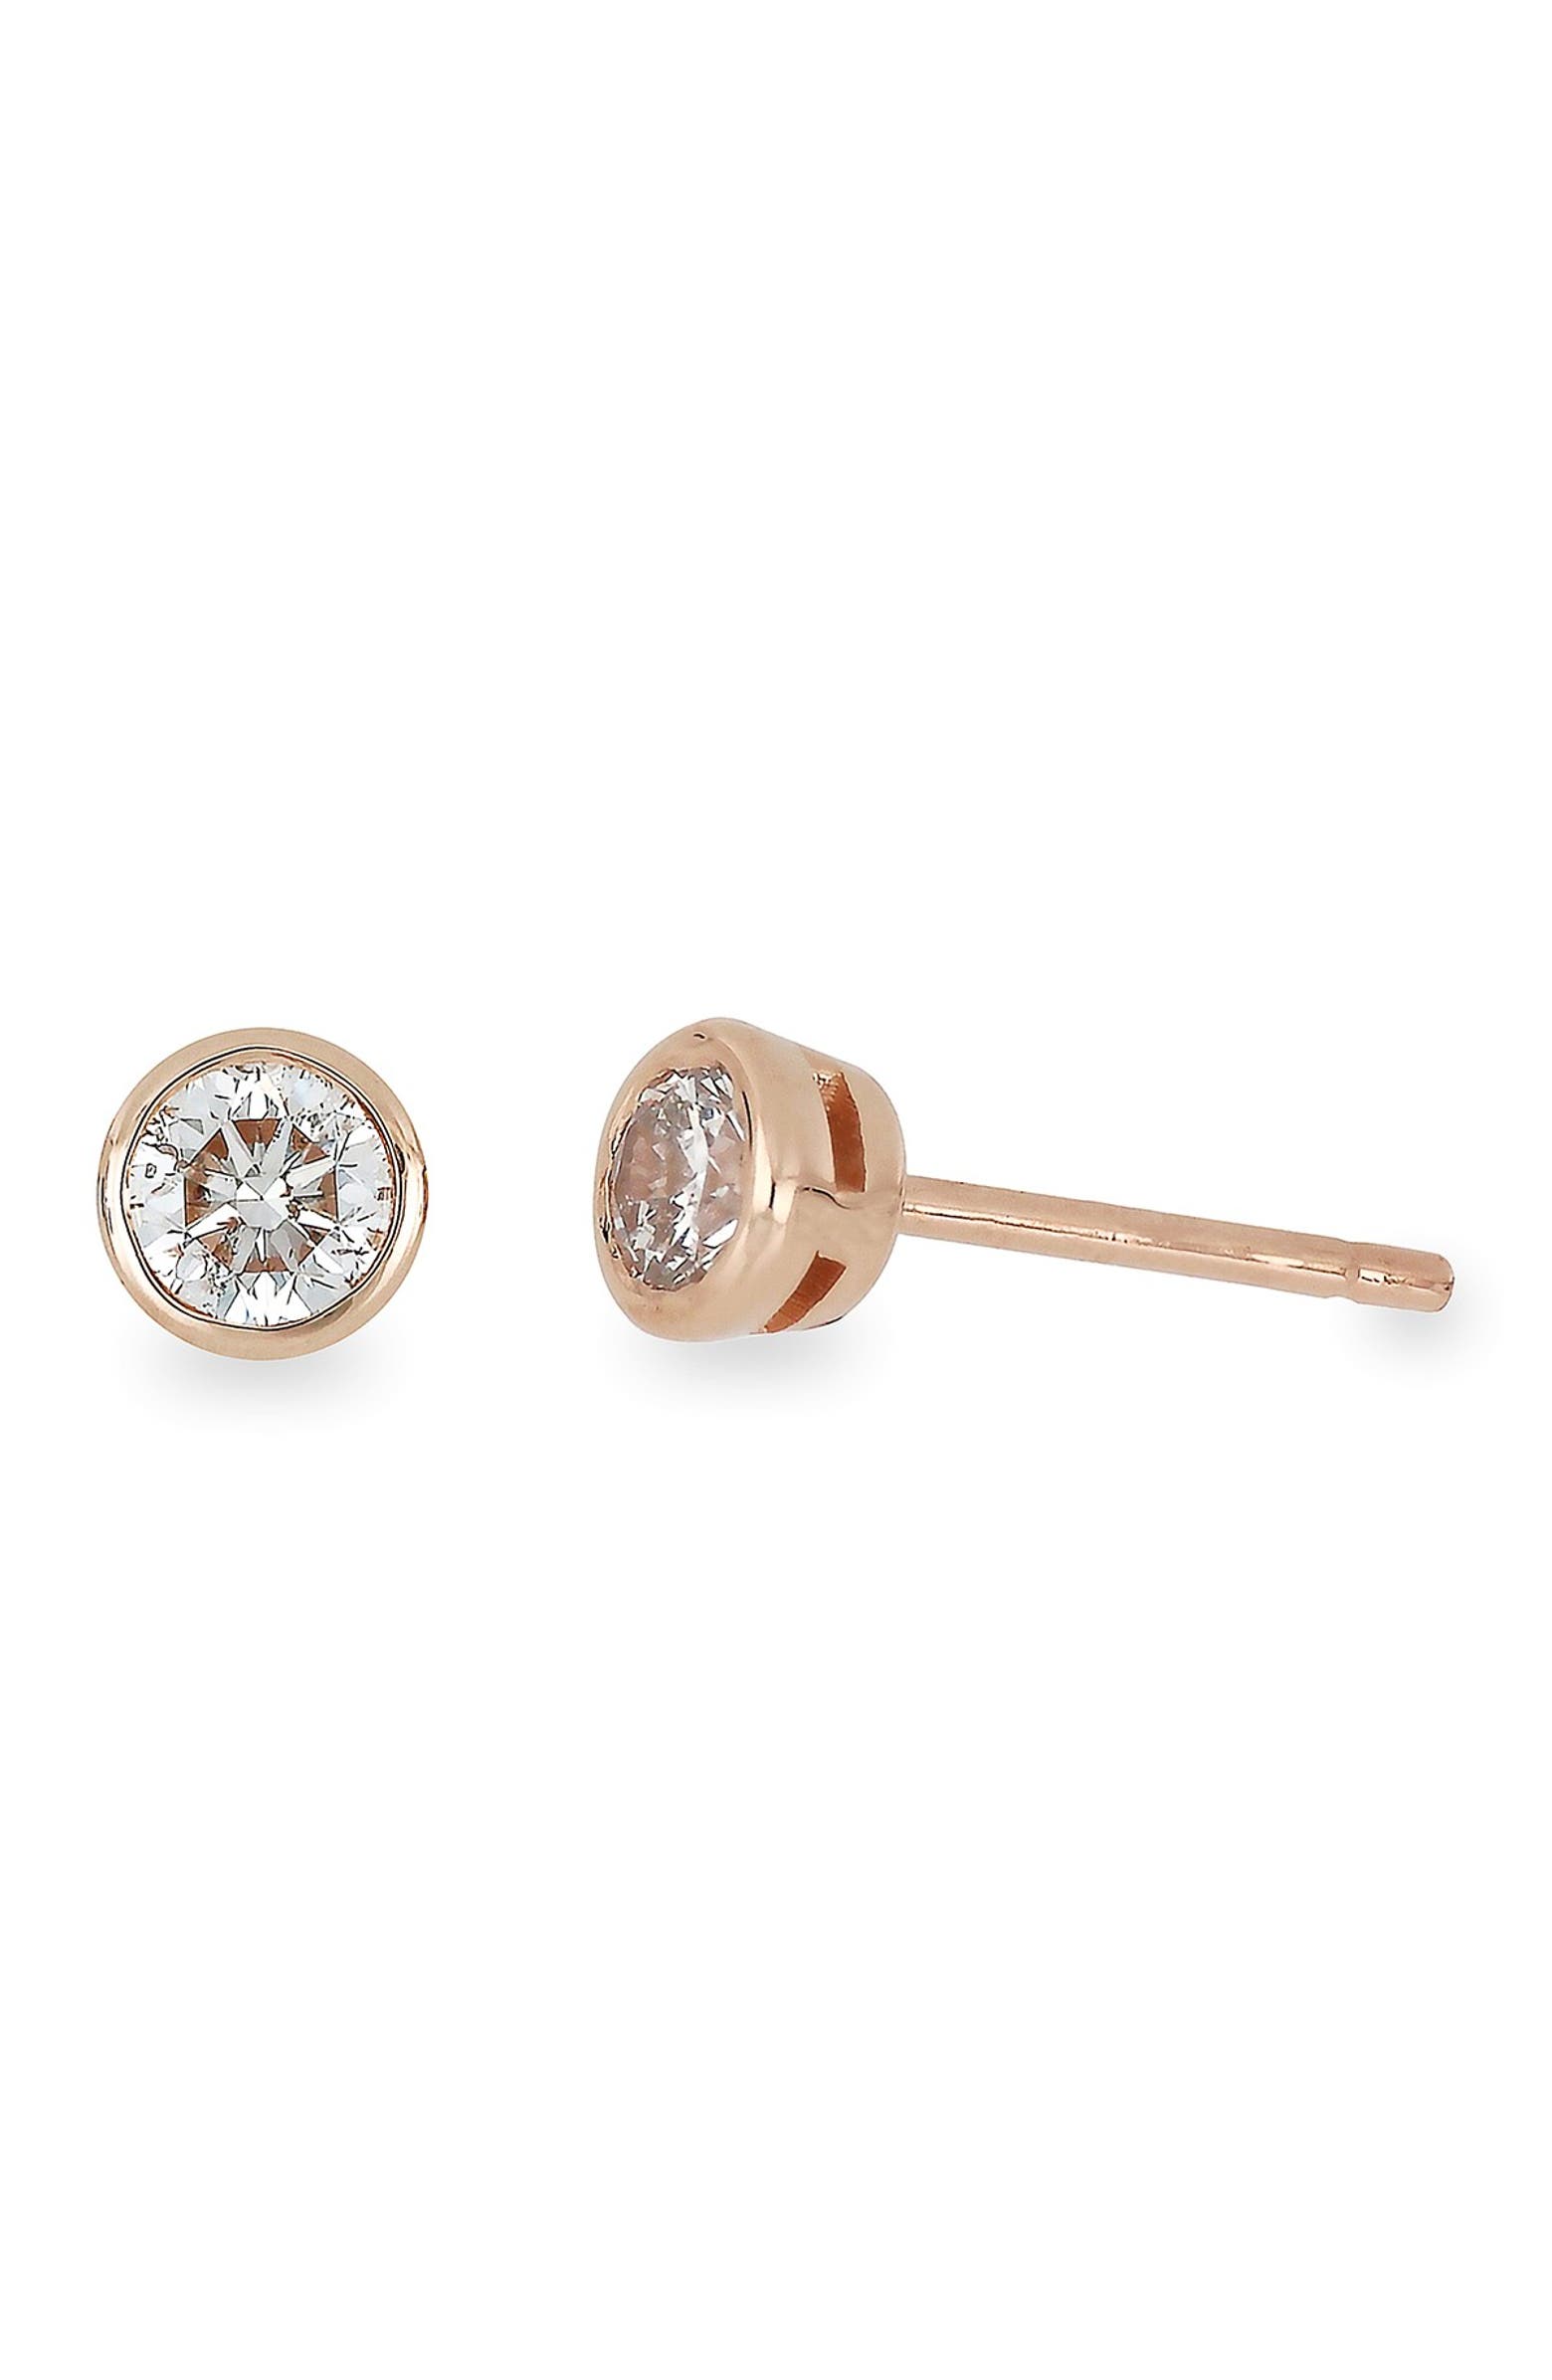 Bony Levy 14K Gold Bezel Set Diamond Stud Earrings - 0.25 ctw; rose, white & yellow gold; $215.22 + Free Shipping